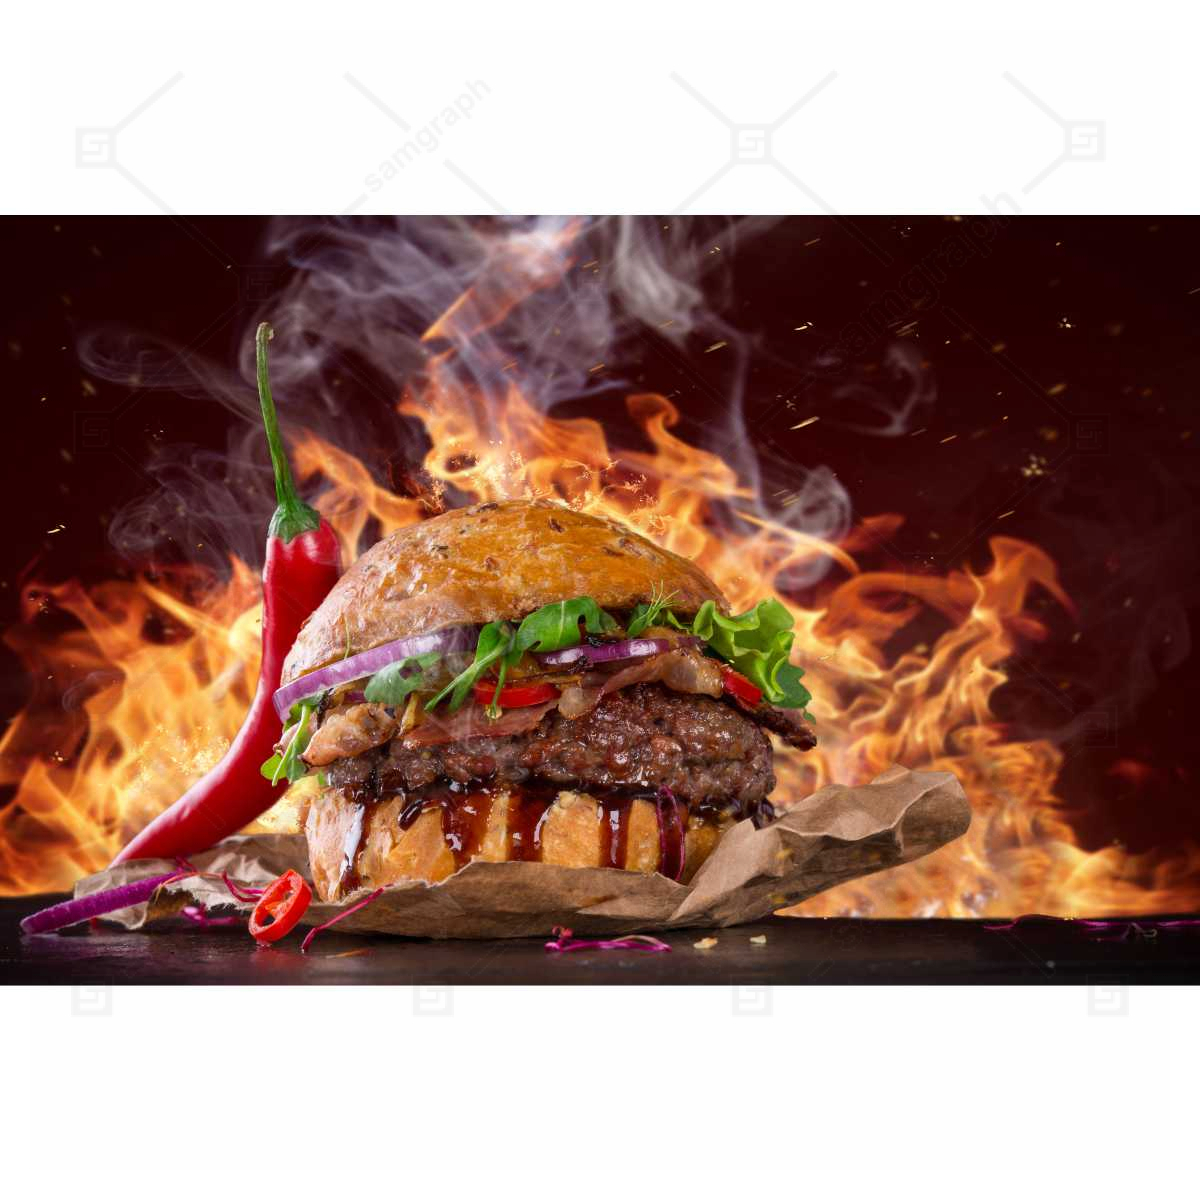 High quality photo of juicy hamburger with fire and pepper lettuce onion parsley 2 1 وکتور زمینه و عناصر مکان های تاریخی برج ایفل دیوار چین برج ساعت پیزا